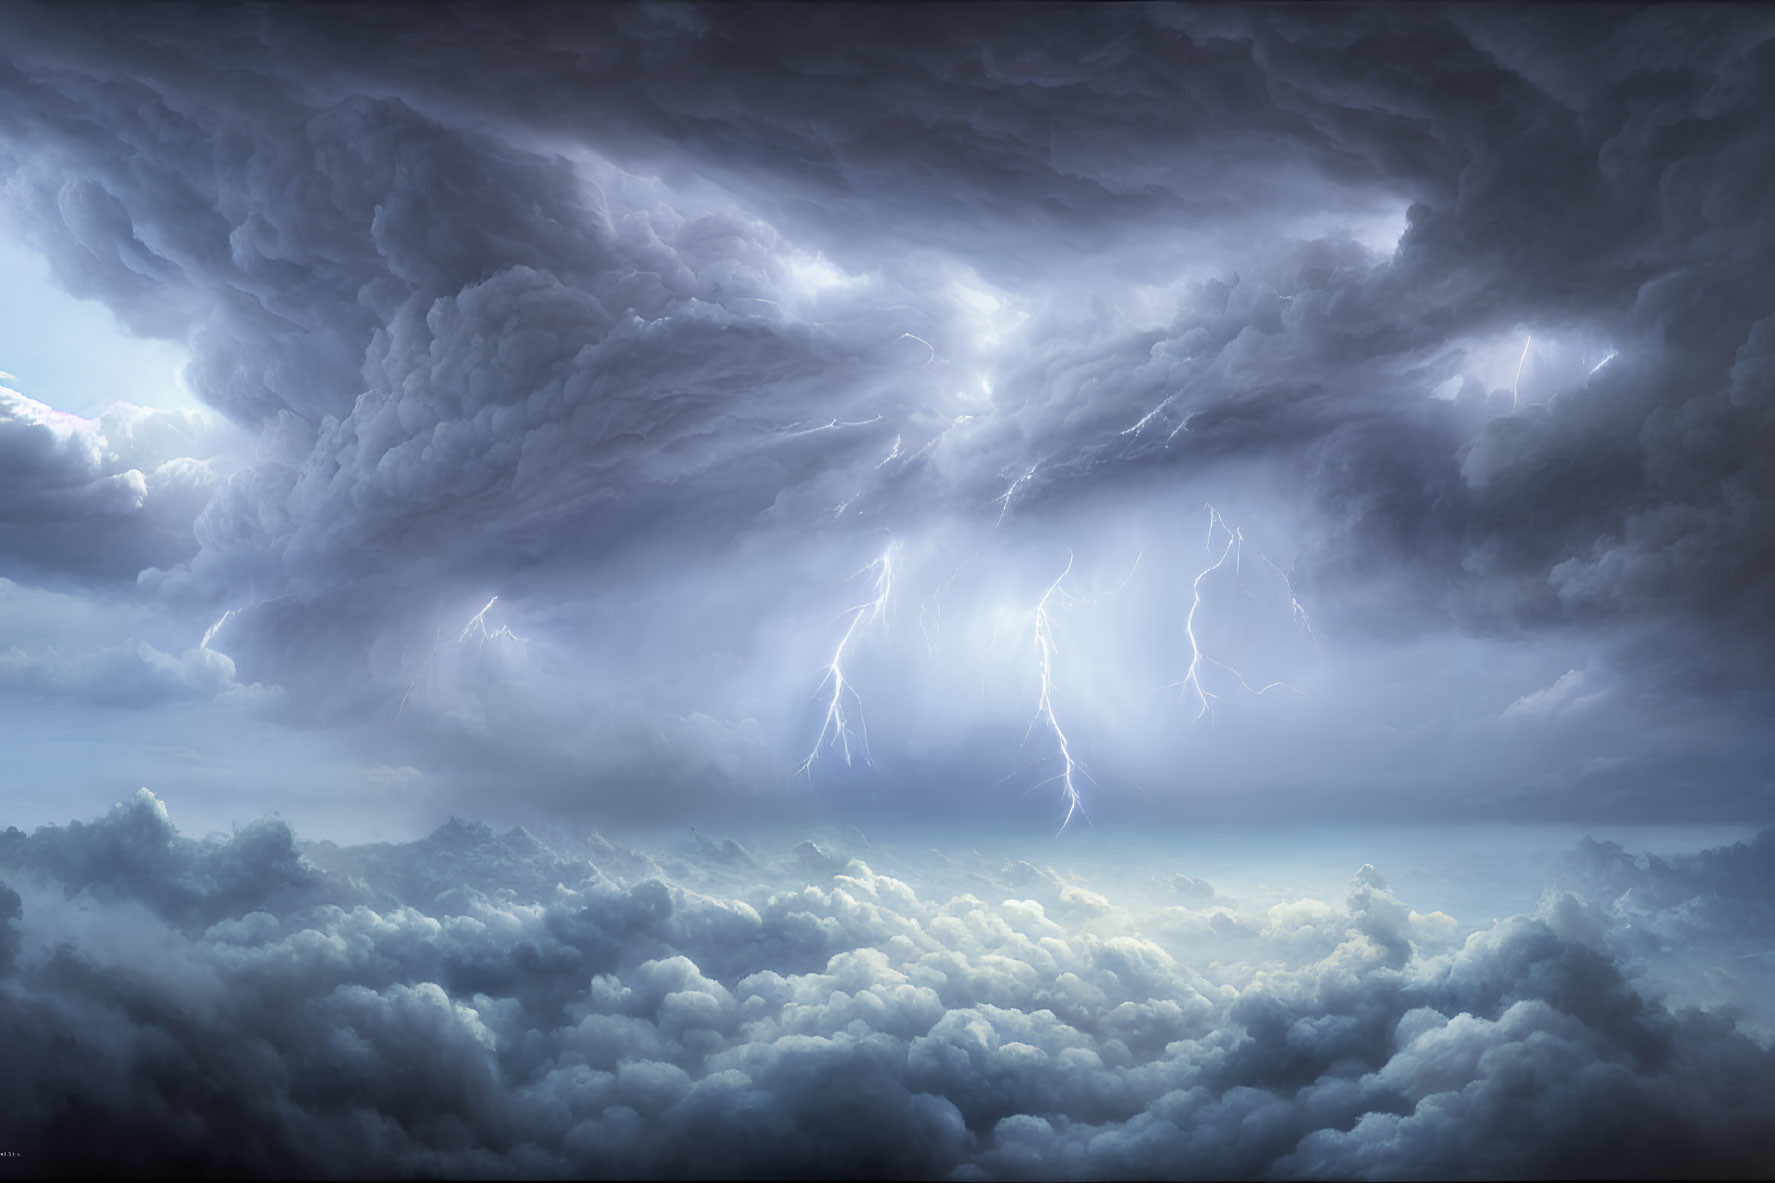 Dramatic thunderstorm with multiple lightning strikes in vast sky